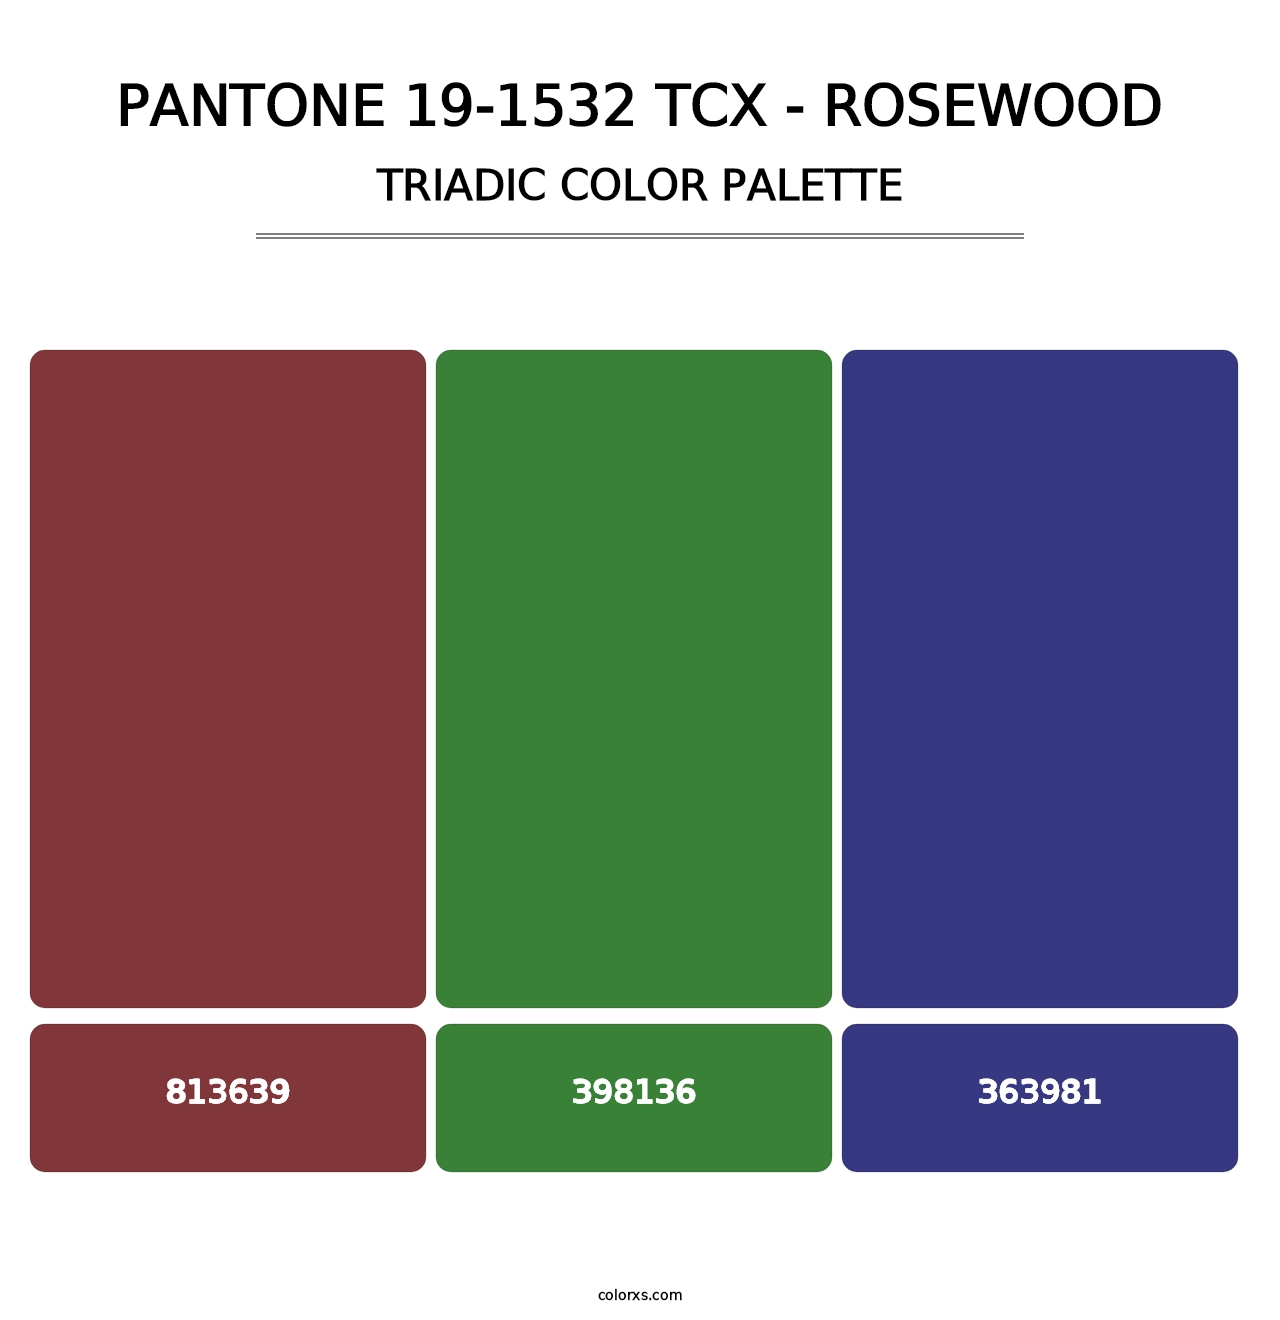 PANTONE 19-1532 TCX - Rosewood - Triadic Color Palette